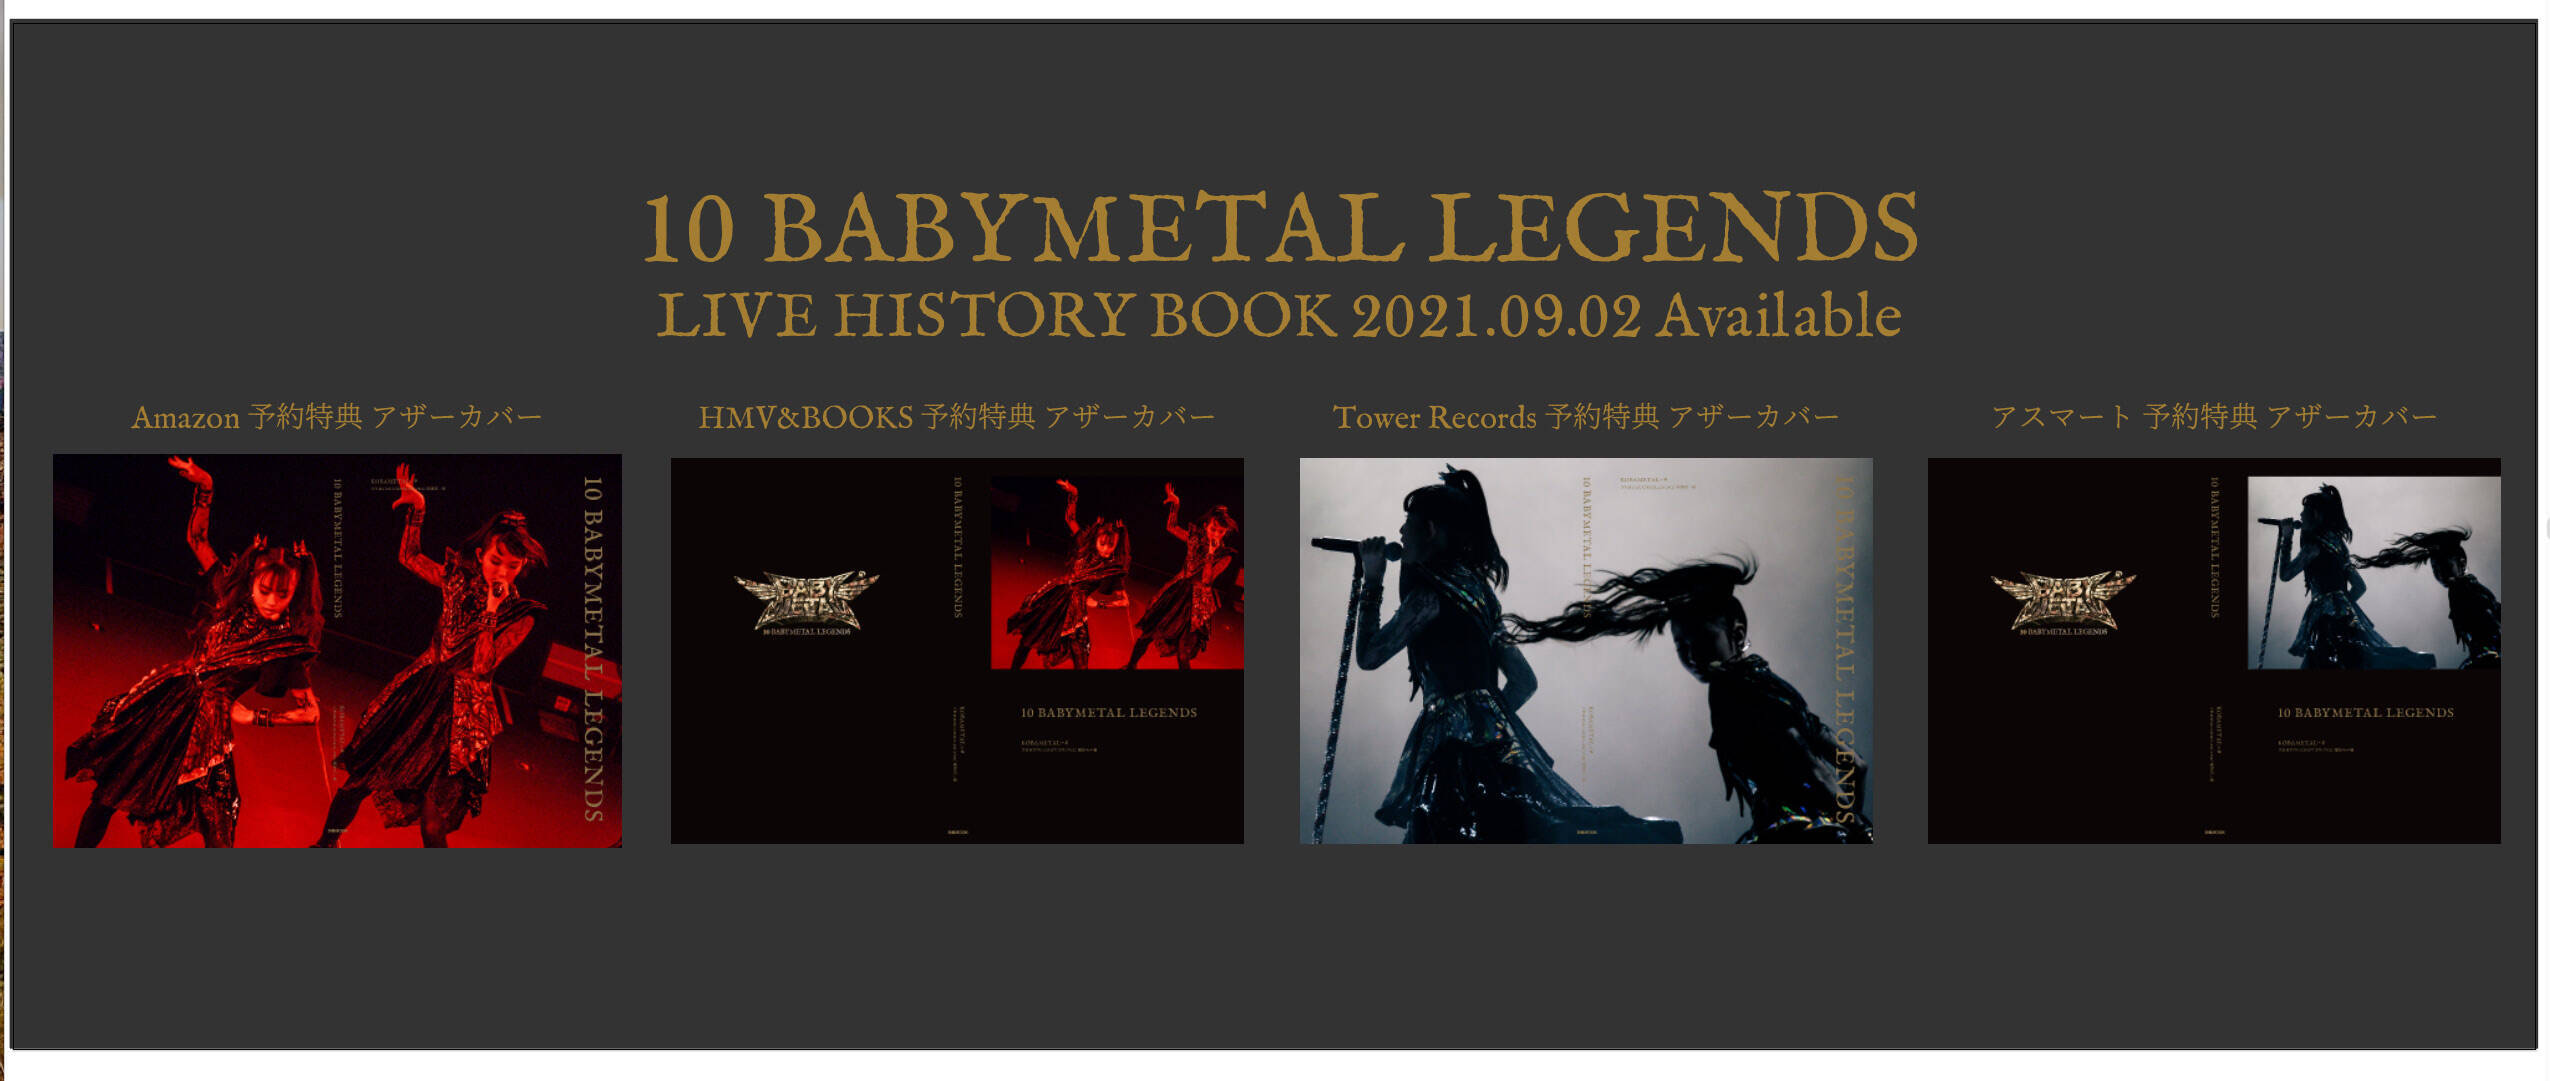 BABYMETAL、初ライブヒストリーブック『10 BABYMETAL LEGENDS』発売